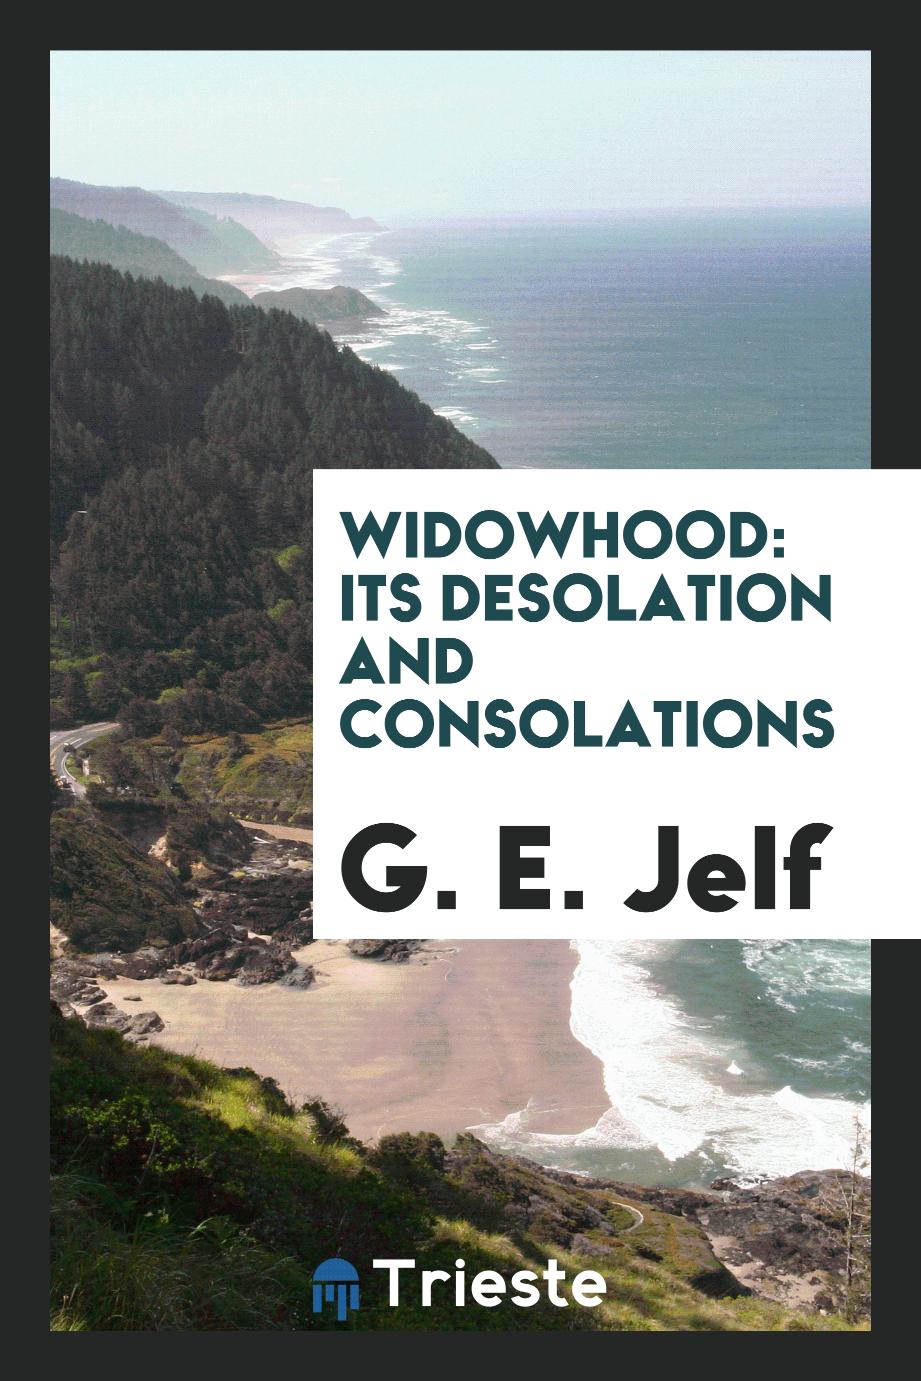 Widowhood: its desolation and consolations